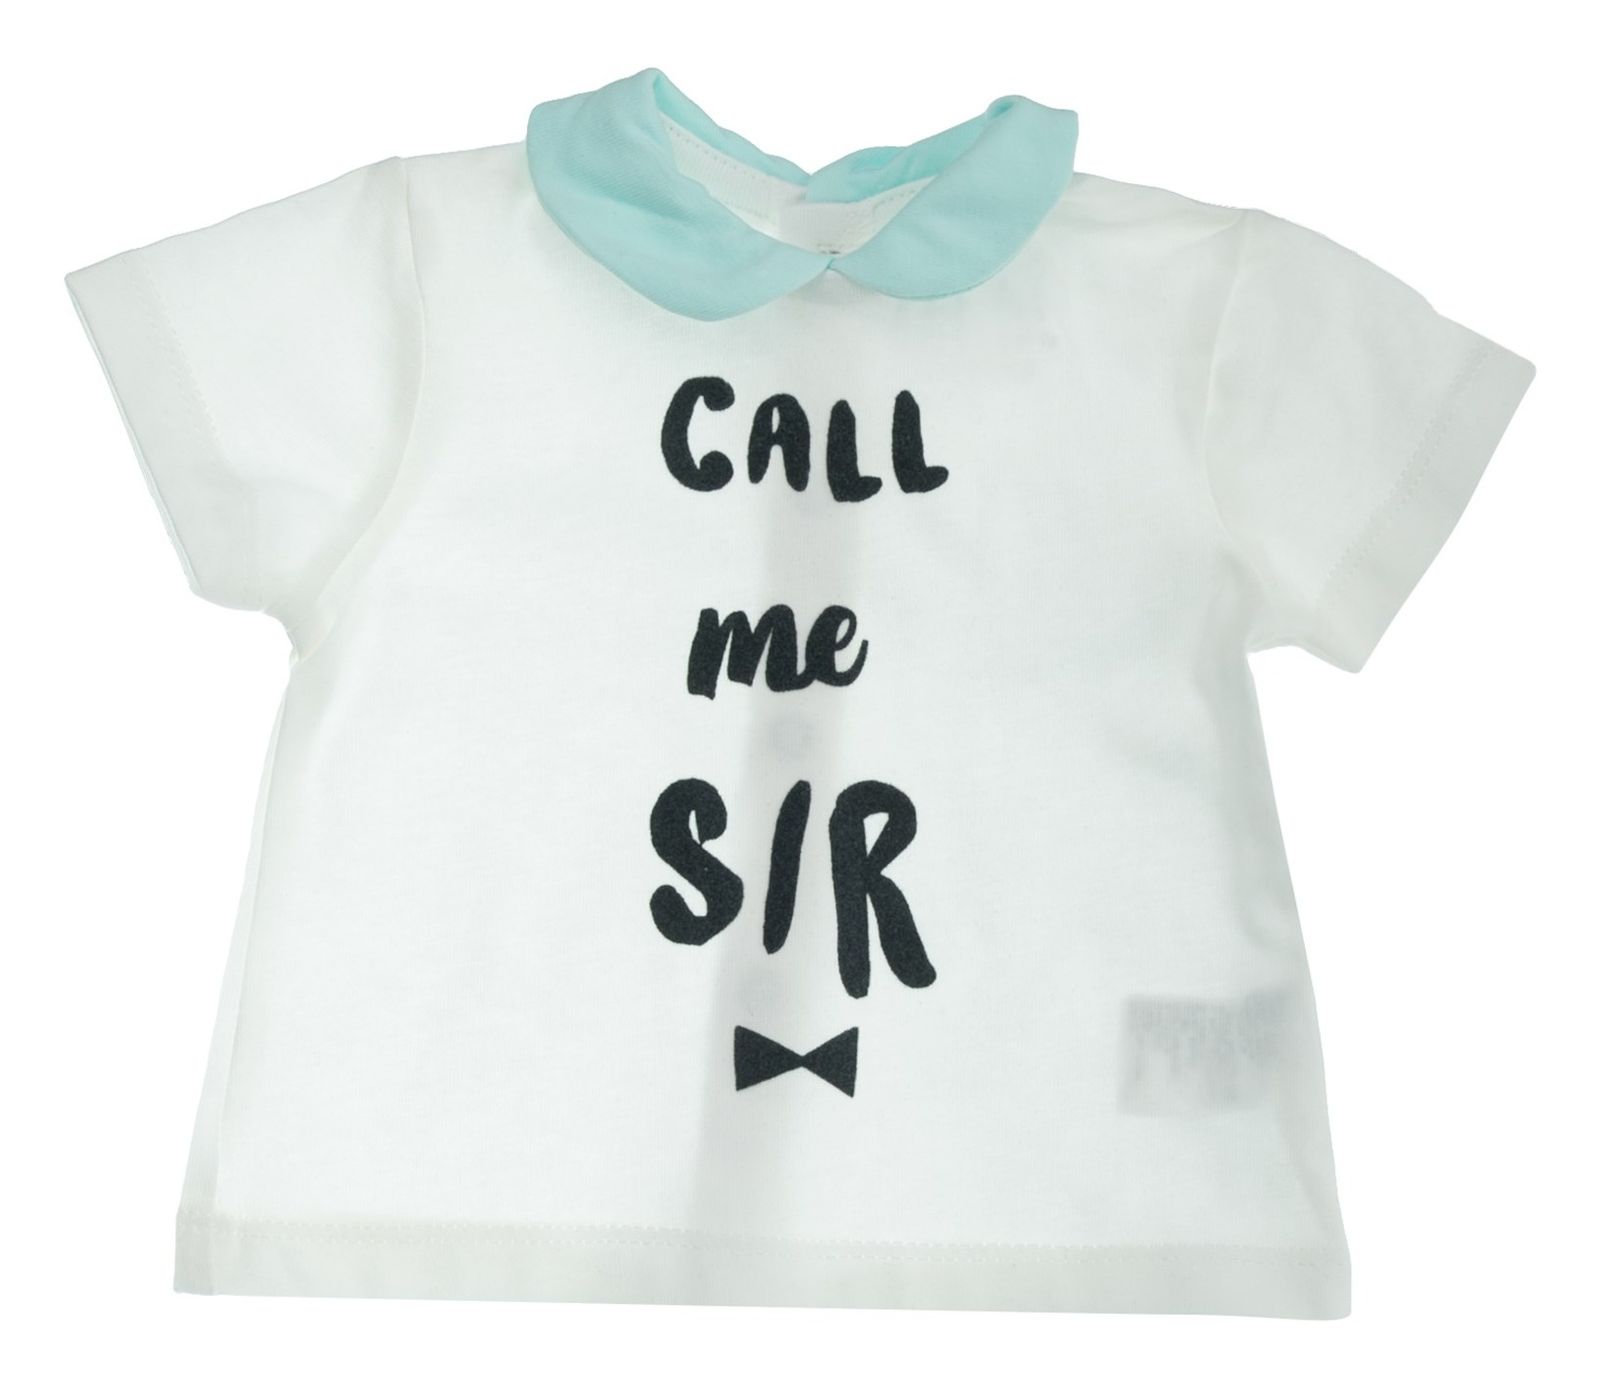 تی شرت و شلوارک نخی نوزادی پسرانه - بلوکیدز - سفيد و آبي - 3